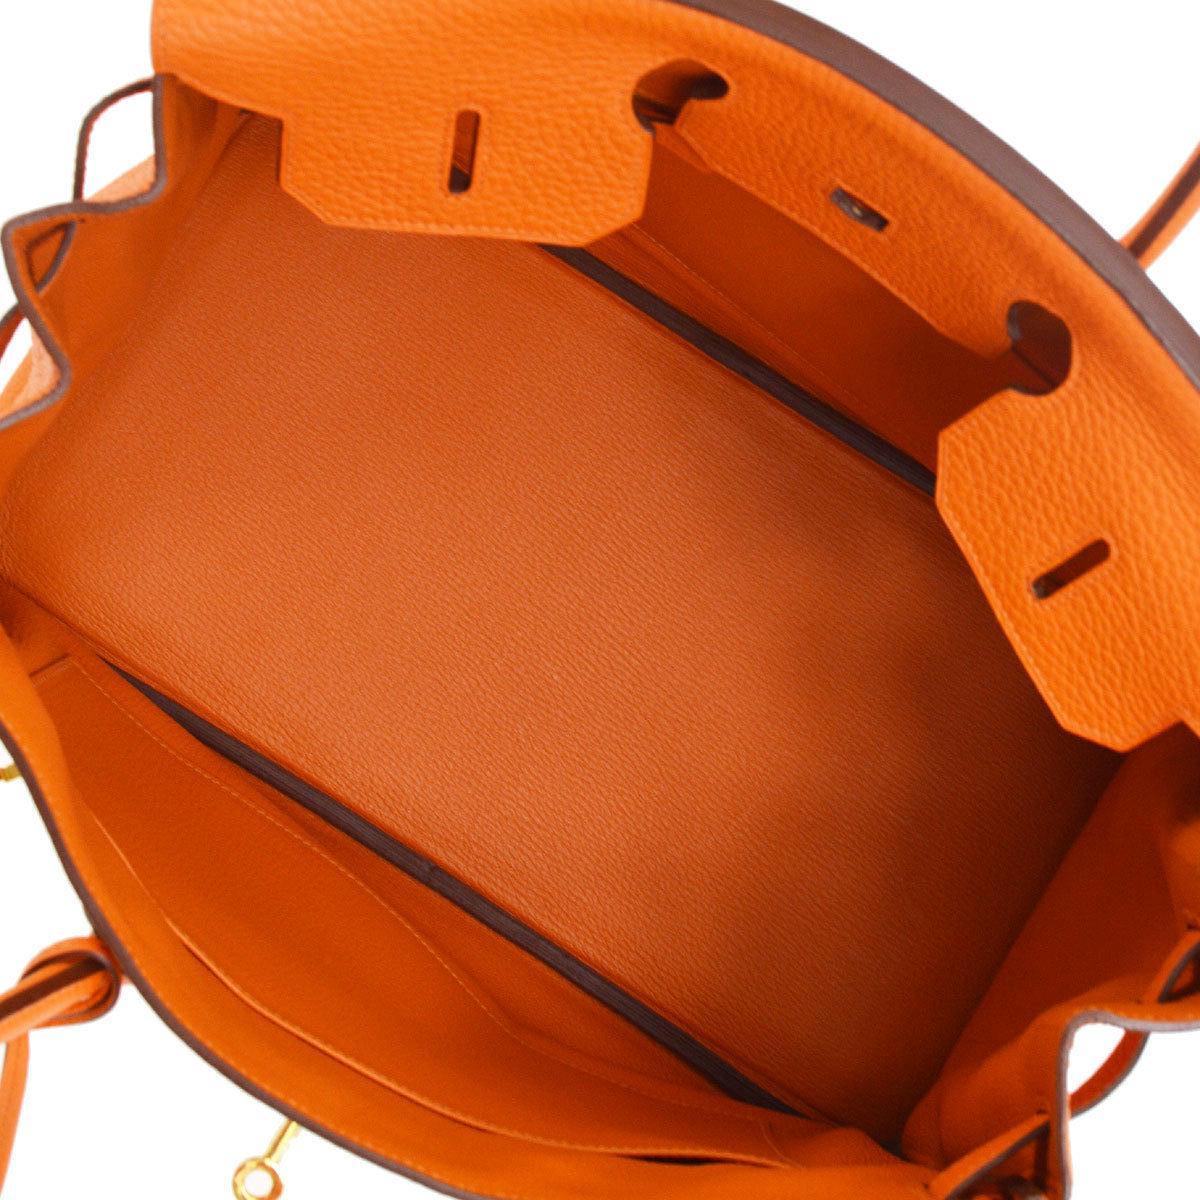 Hermes Birkin 35 Orange Leather Gold Top Handle Satchel Travel Tote Bag in Box 5